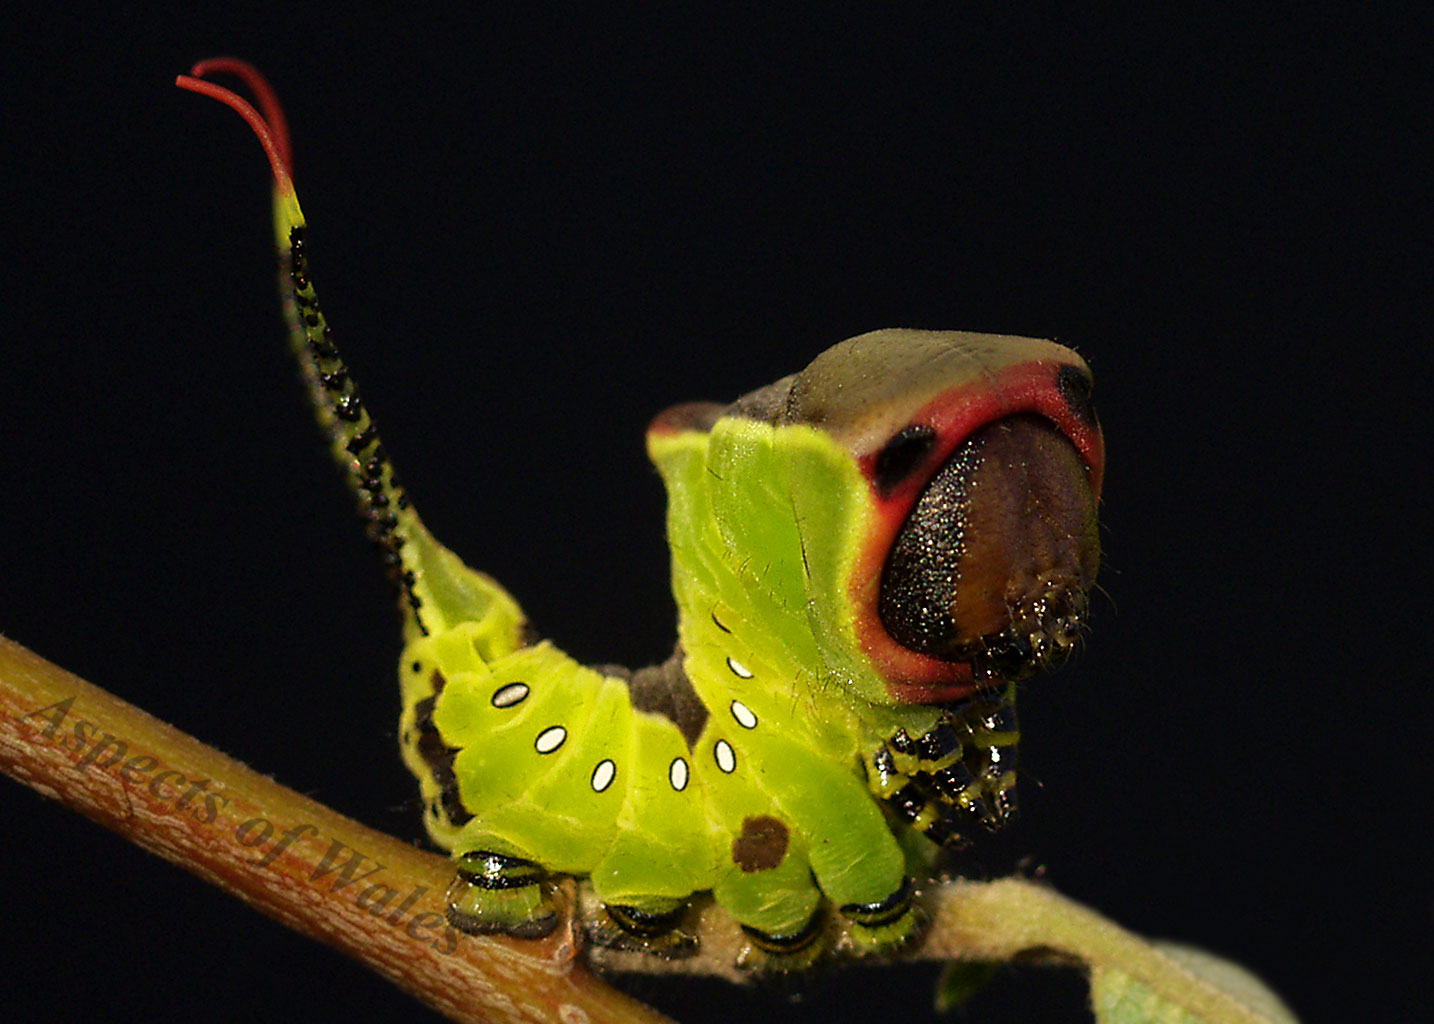 Puss moth caterpillar, Cerura vinula